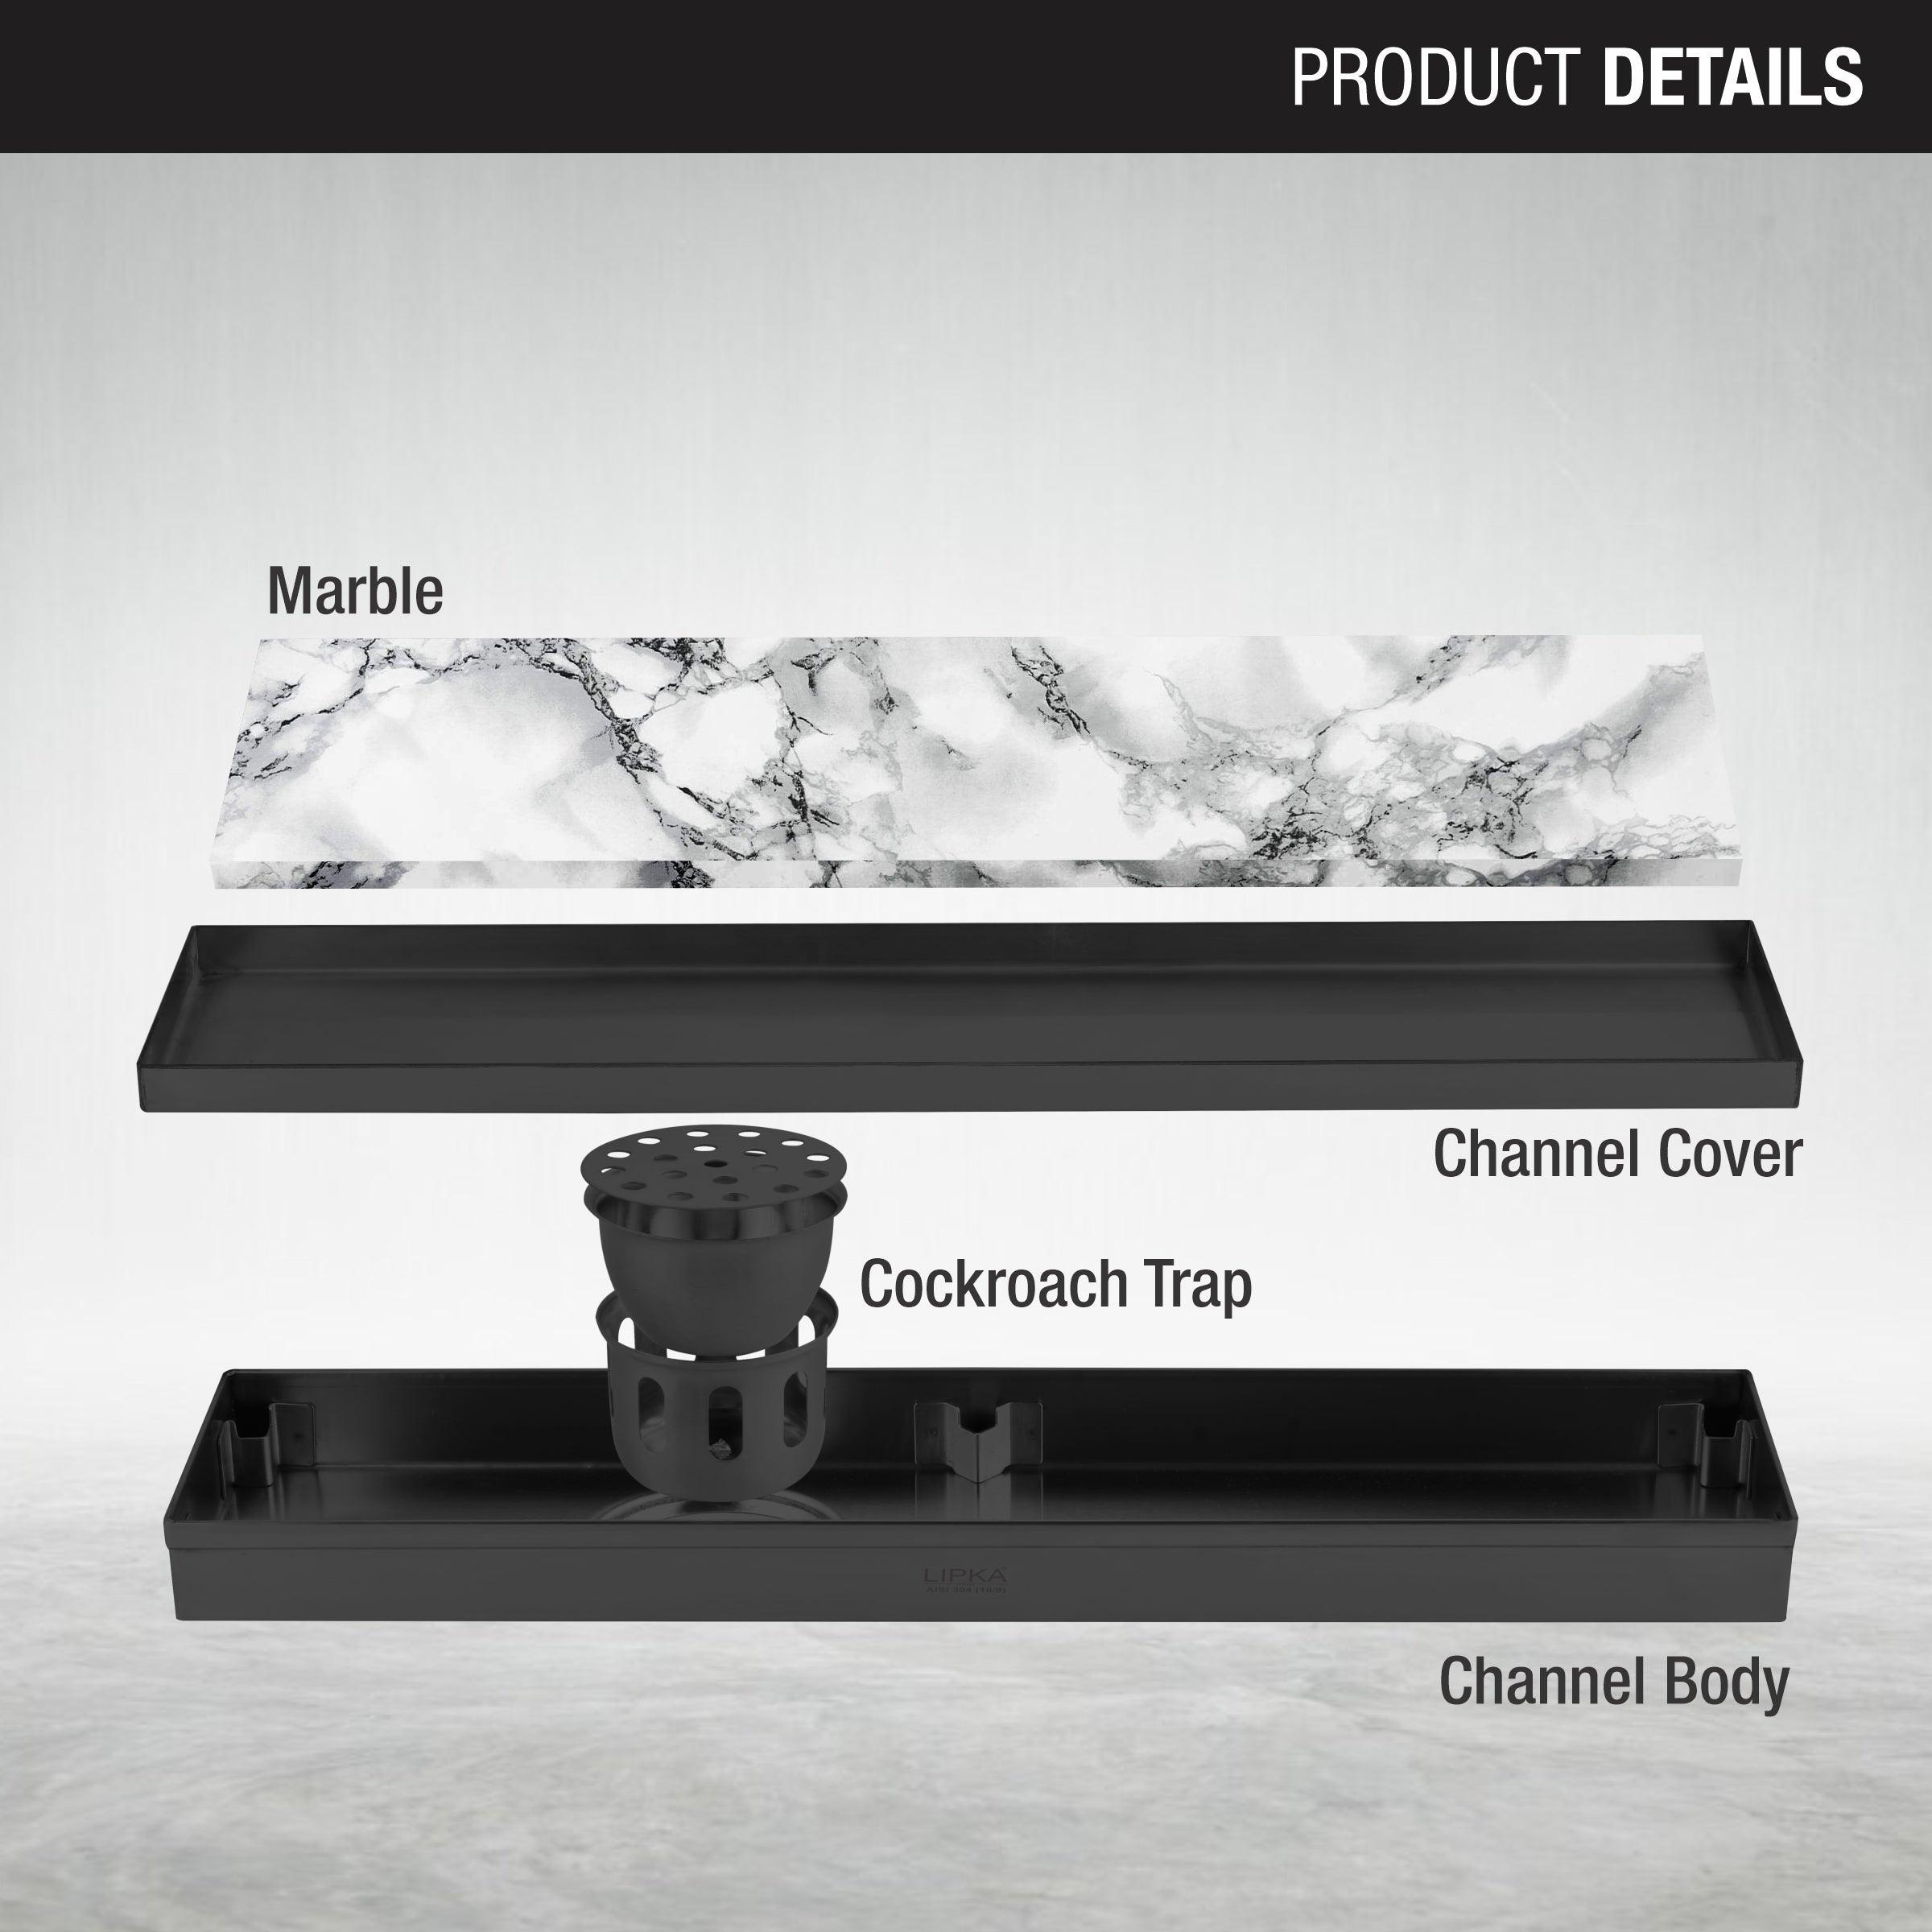 Marble Insert Shower Drain Channel - Black (32 x 4 Inches) - LIPKA - Lipka Home